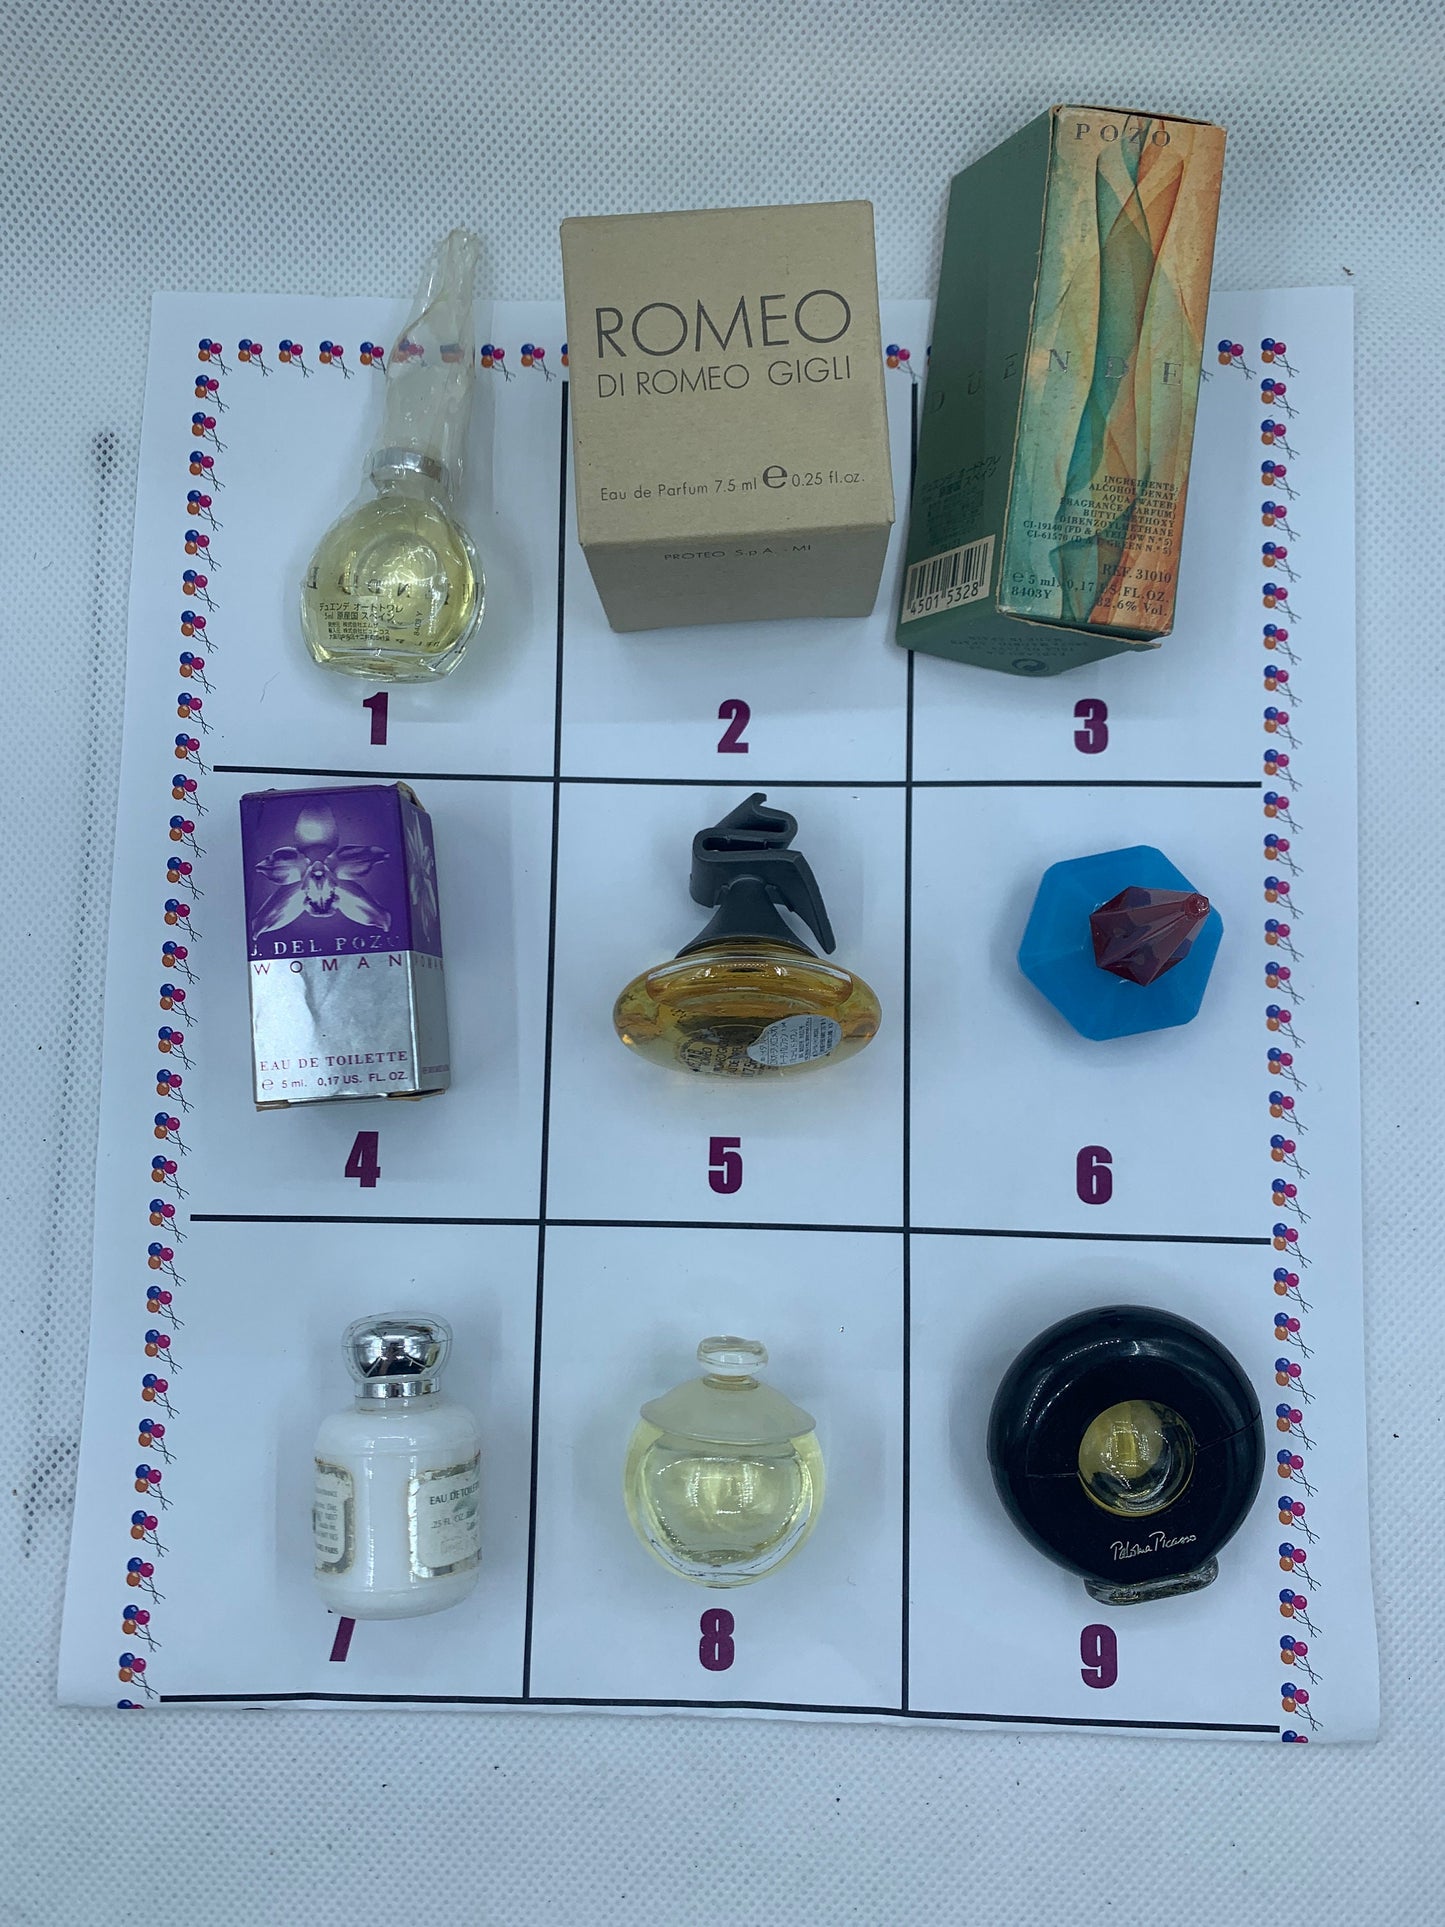 Paloma Picasso ROMEO  Eau De Toilette EDT Miniature Bottle 5mL / 0.17 fl oz.  Perfume Fragrance